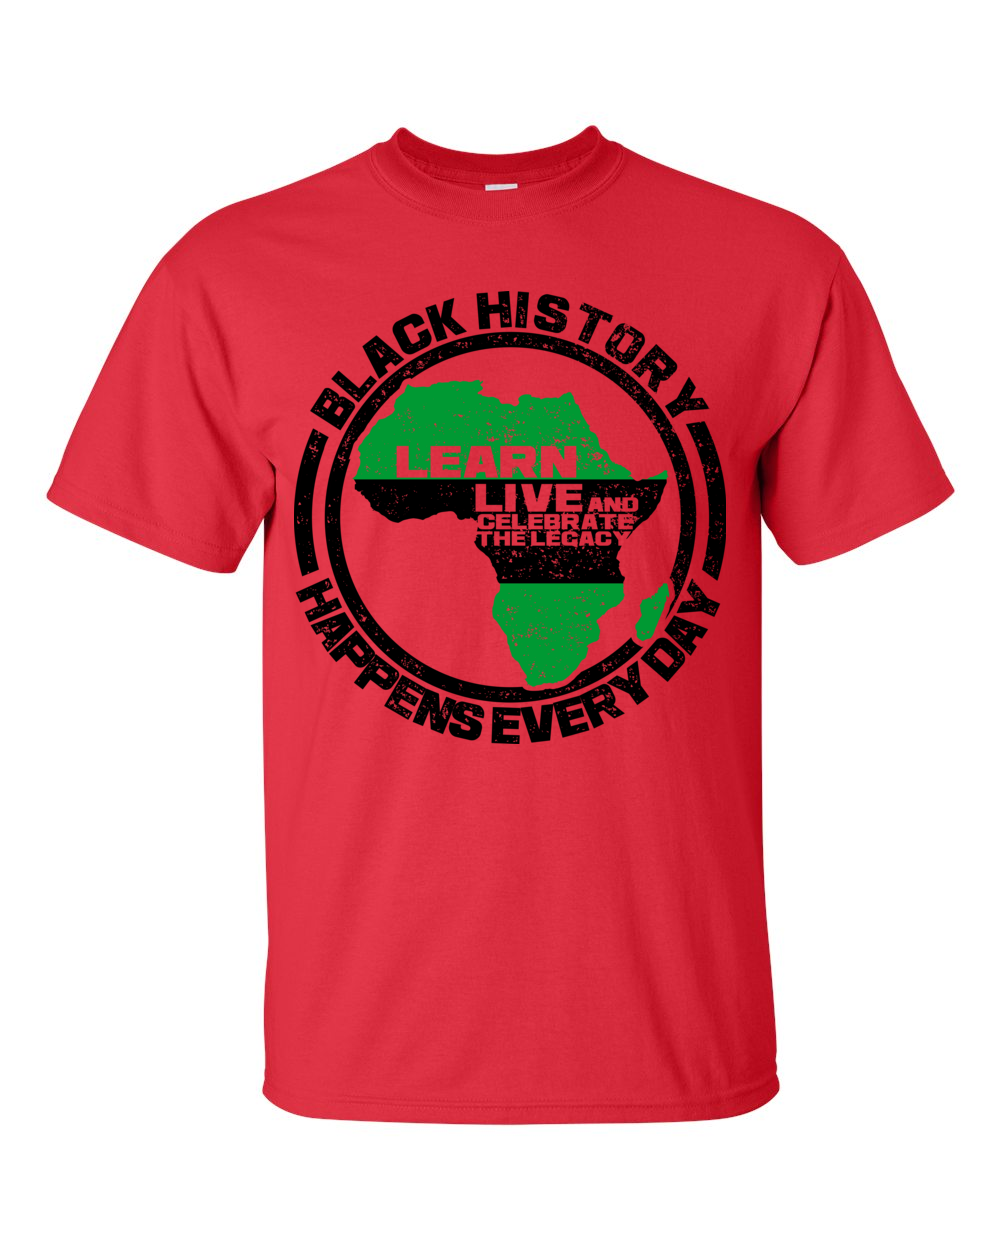 6 of 6: Black History Happens Everyday Short Sleeve Unisex T-Shirt-T-Shirt-RBG Forever-Small-Red-The Black Art Depot